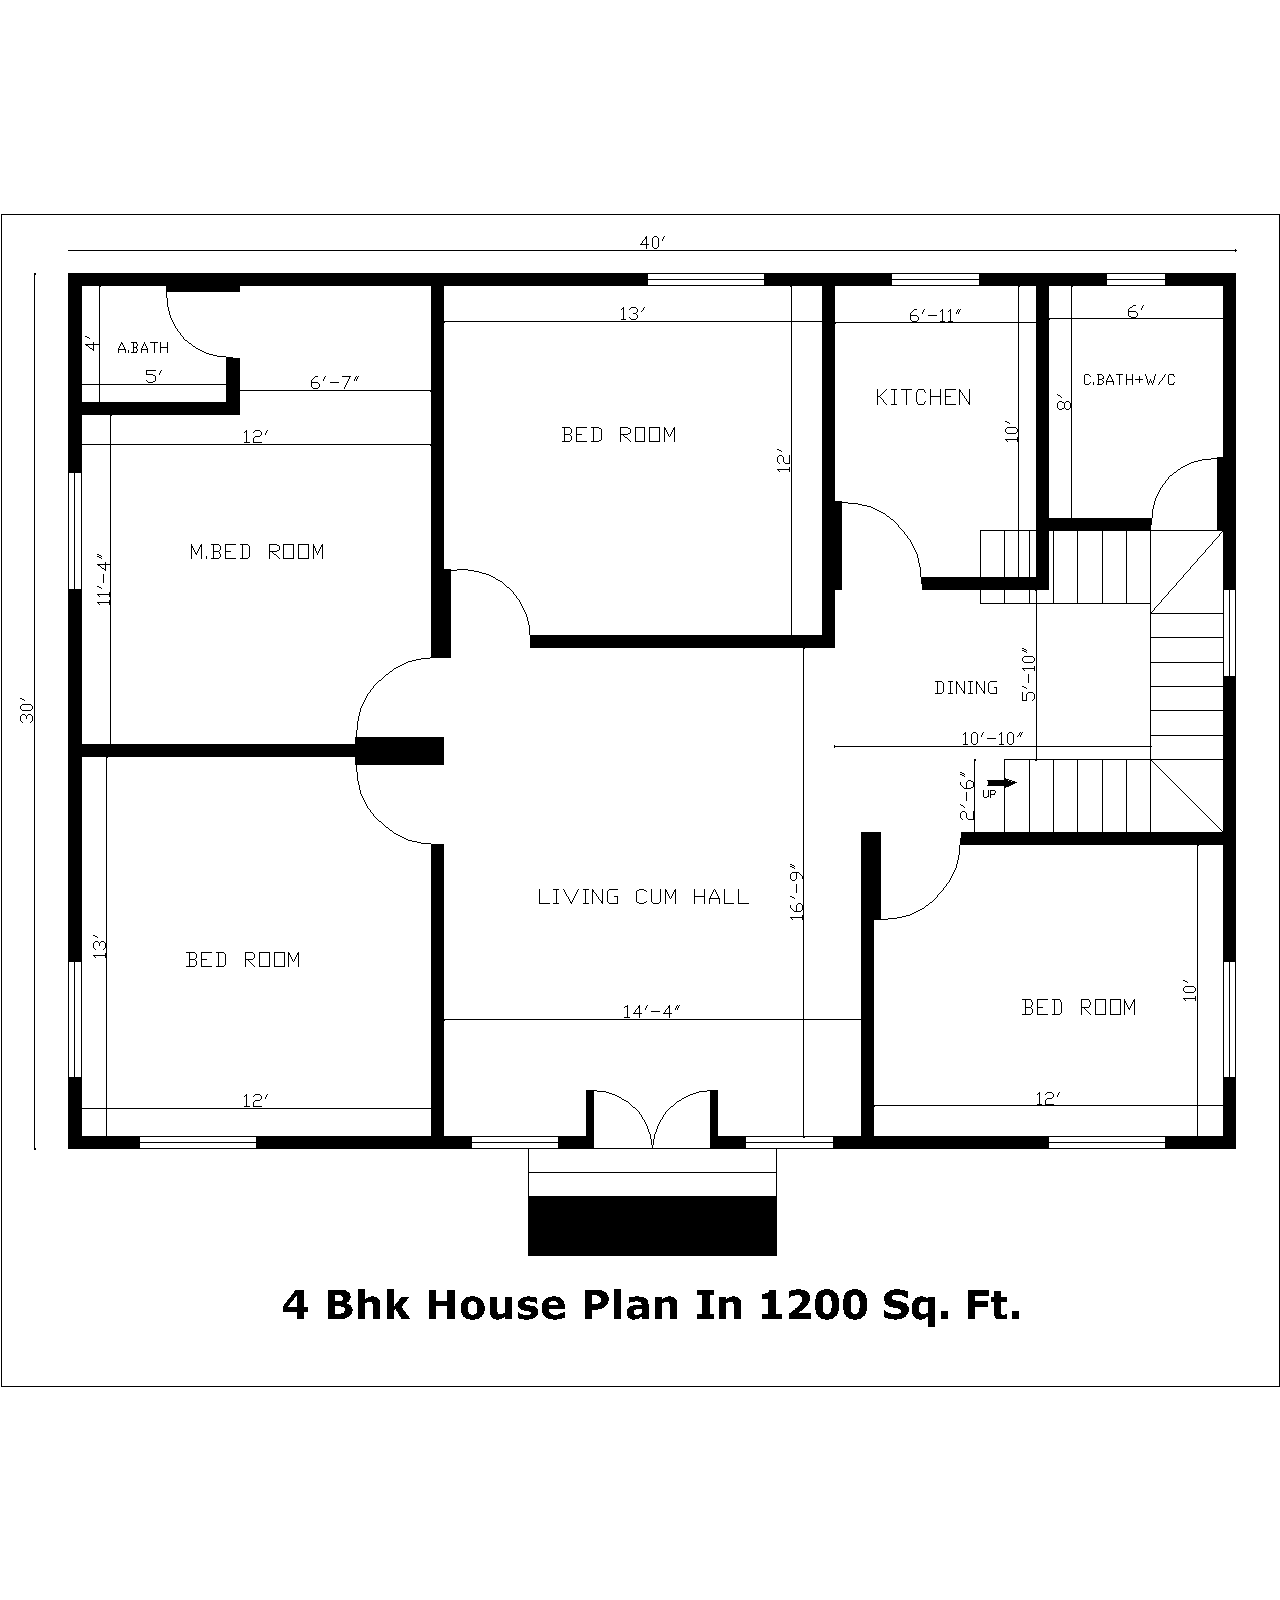 4 Bhk House Plan In 1200 Sq. Ft. | 4 Bhk Gharka Naksha In 1200 Sq. Ft.